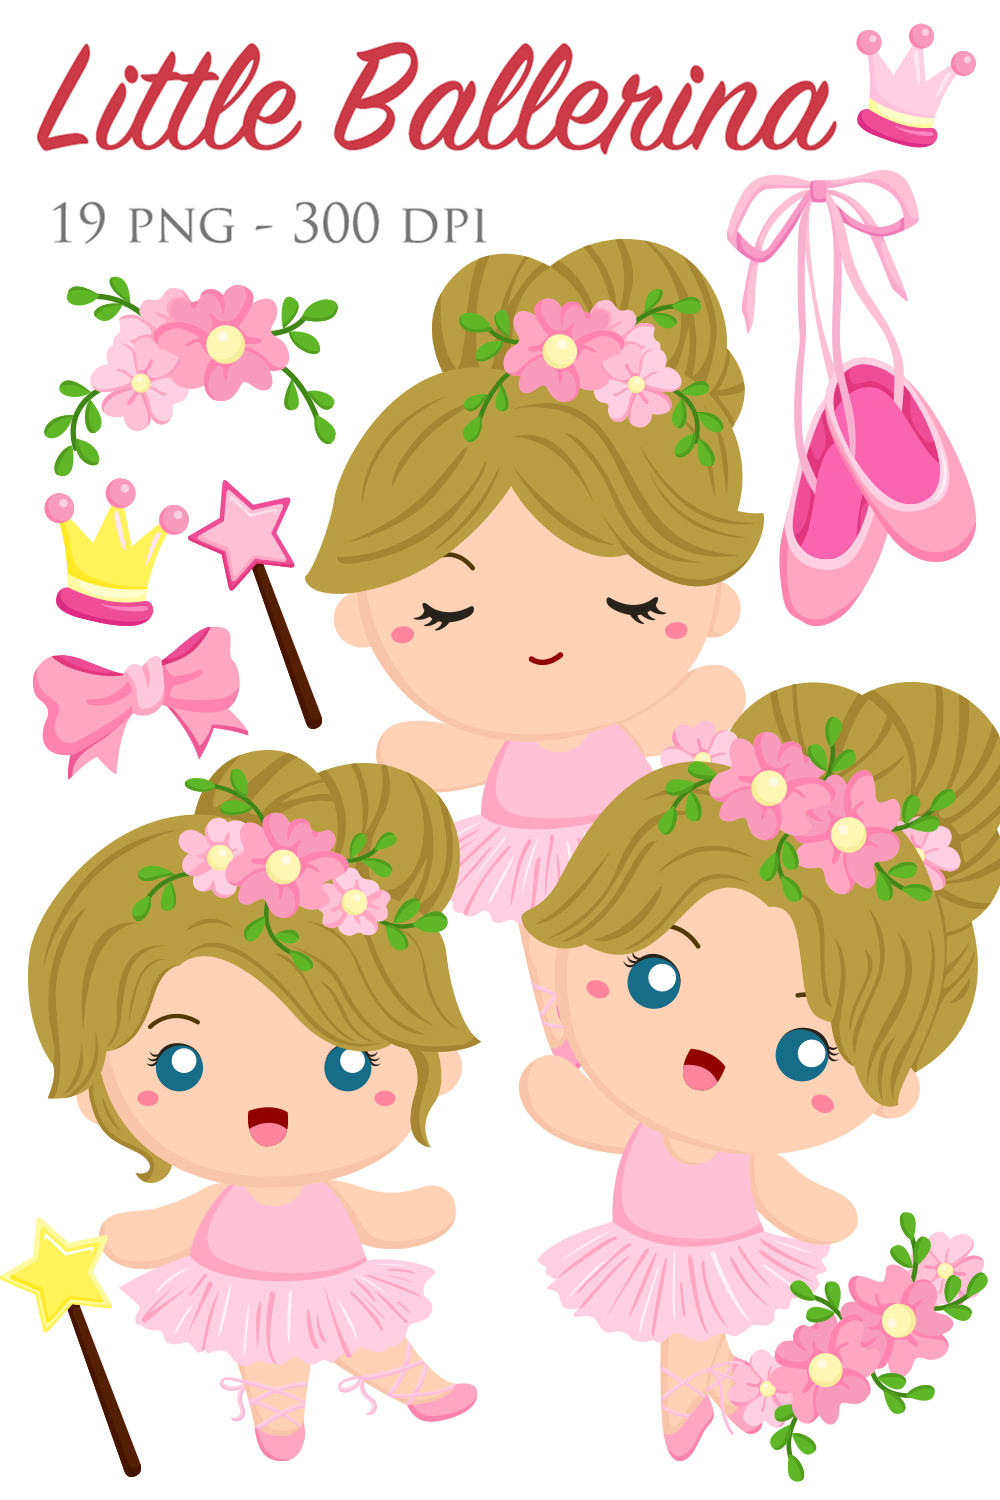 Beautiful Girl Kids Pink Ballerina Ballet Sport Activity Illustration Vector Clipart Cartoon pinterest preview image.